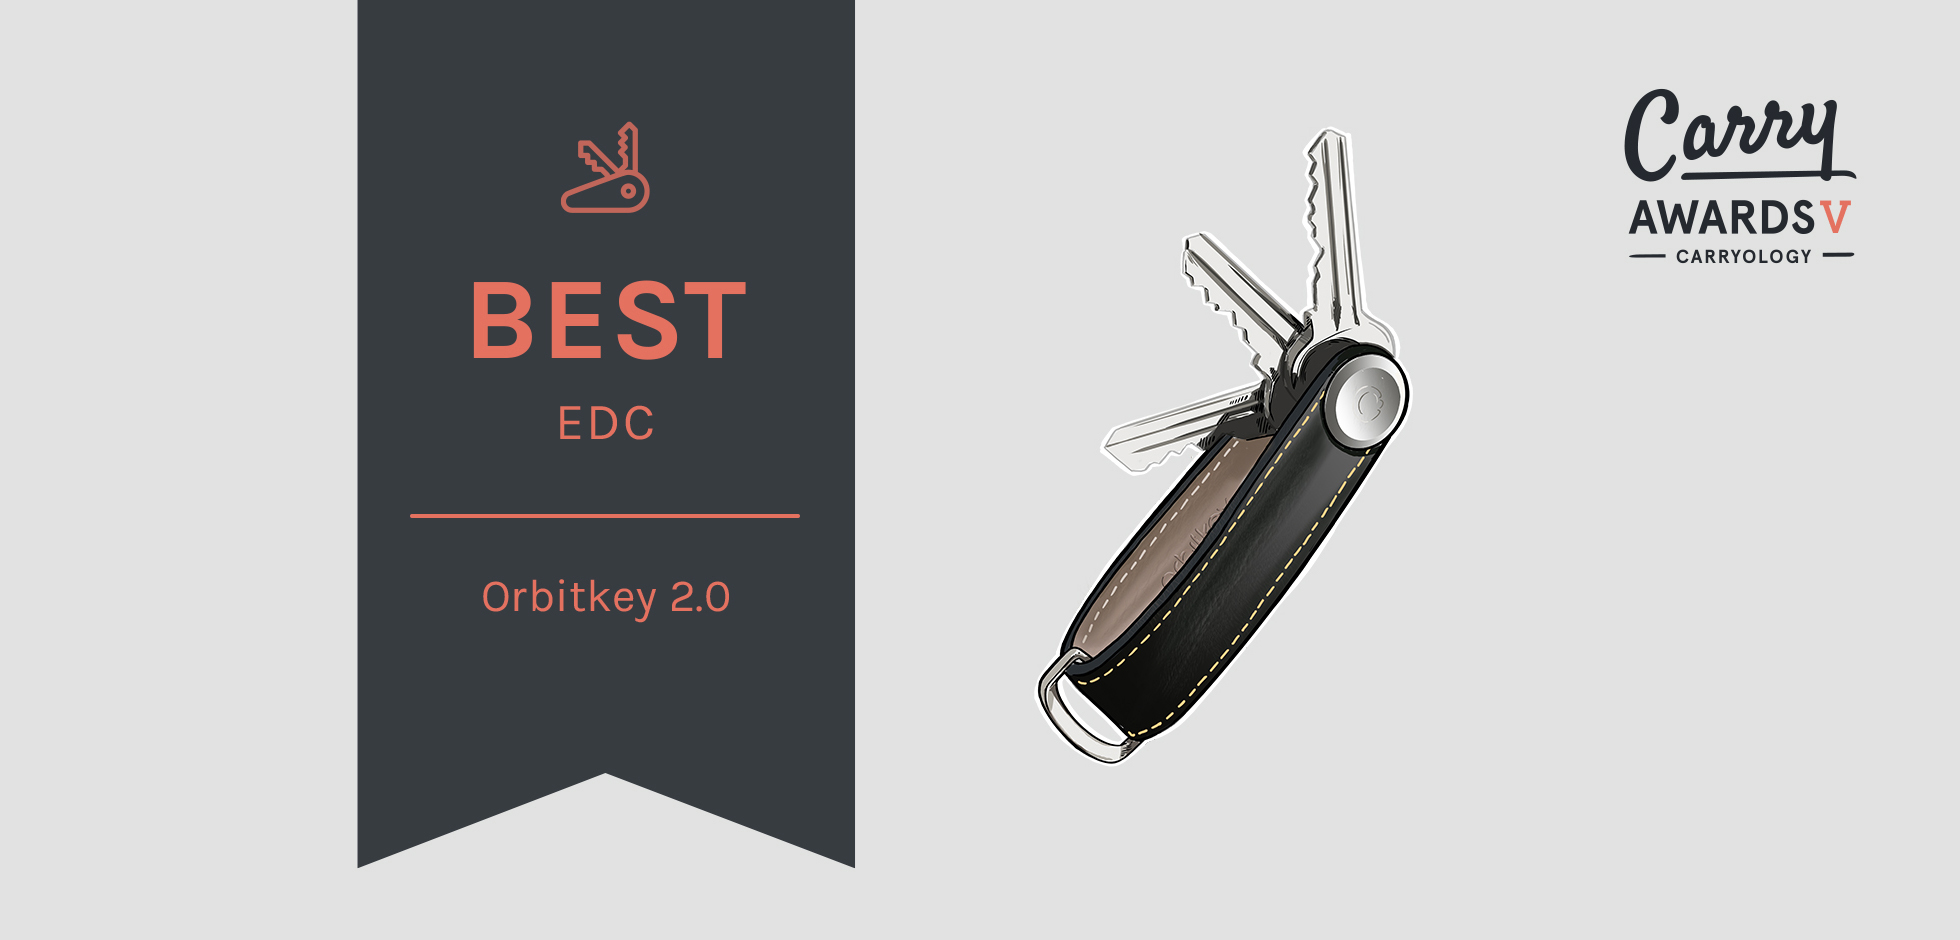 Orbitkey 2.0 Best EDC Carry Awards